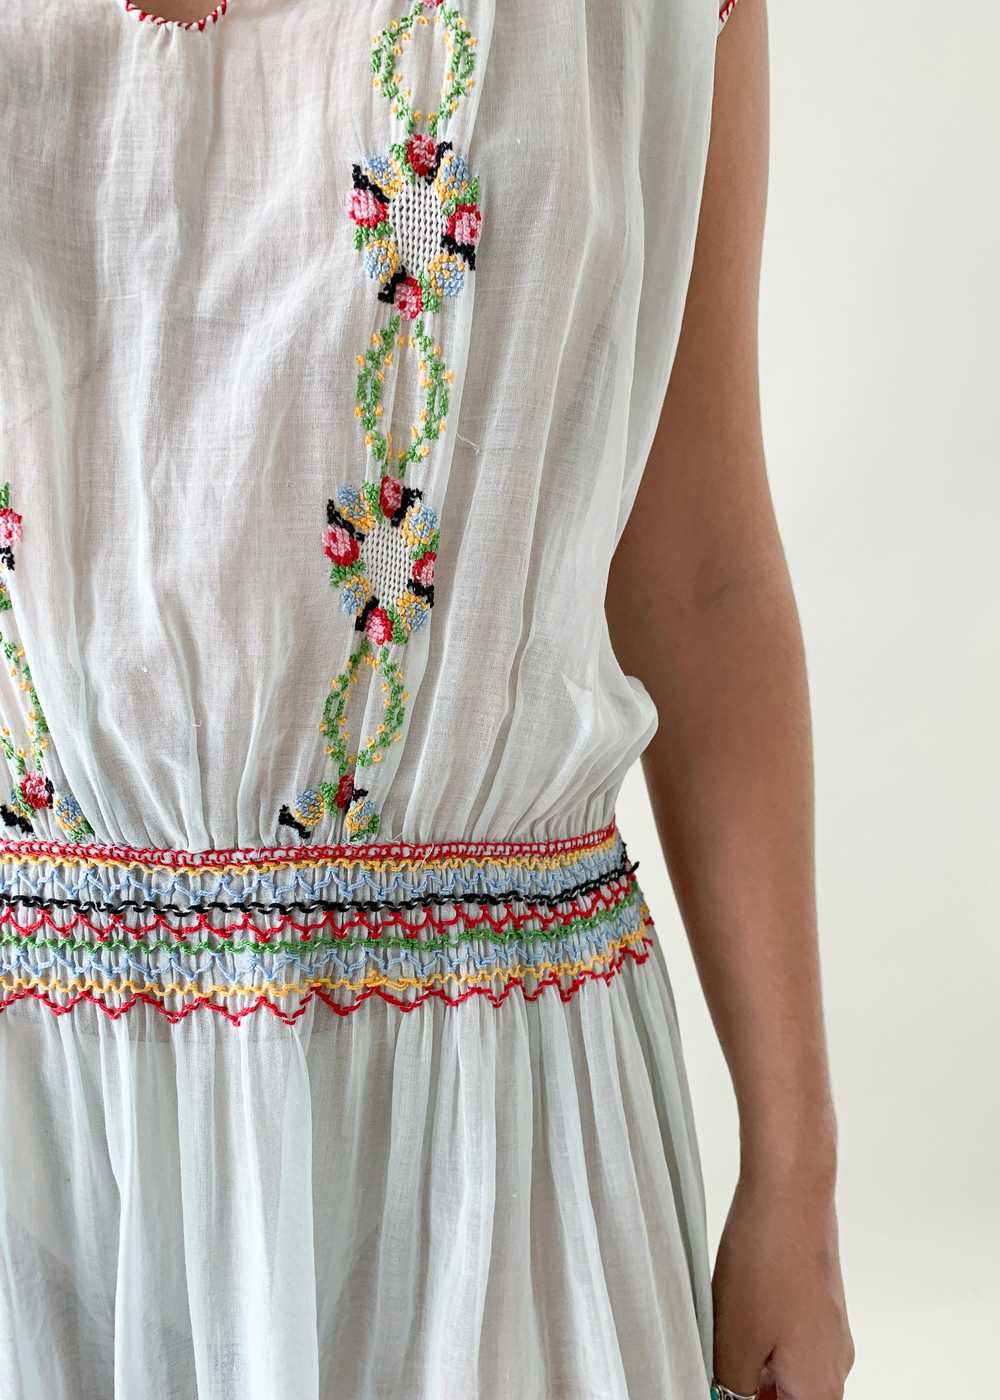 Vintage 1920s Embroidered Cotton Dress - image 2